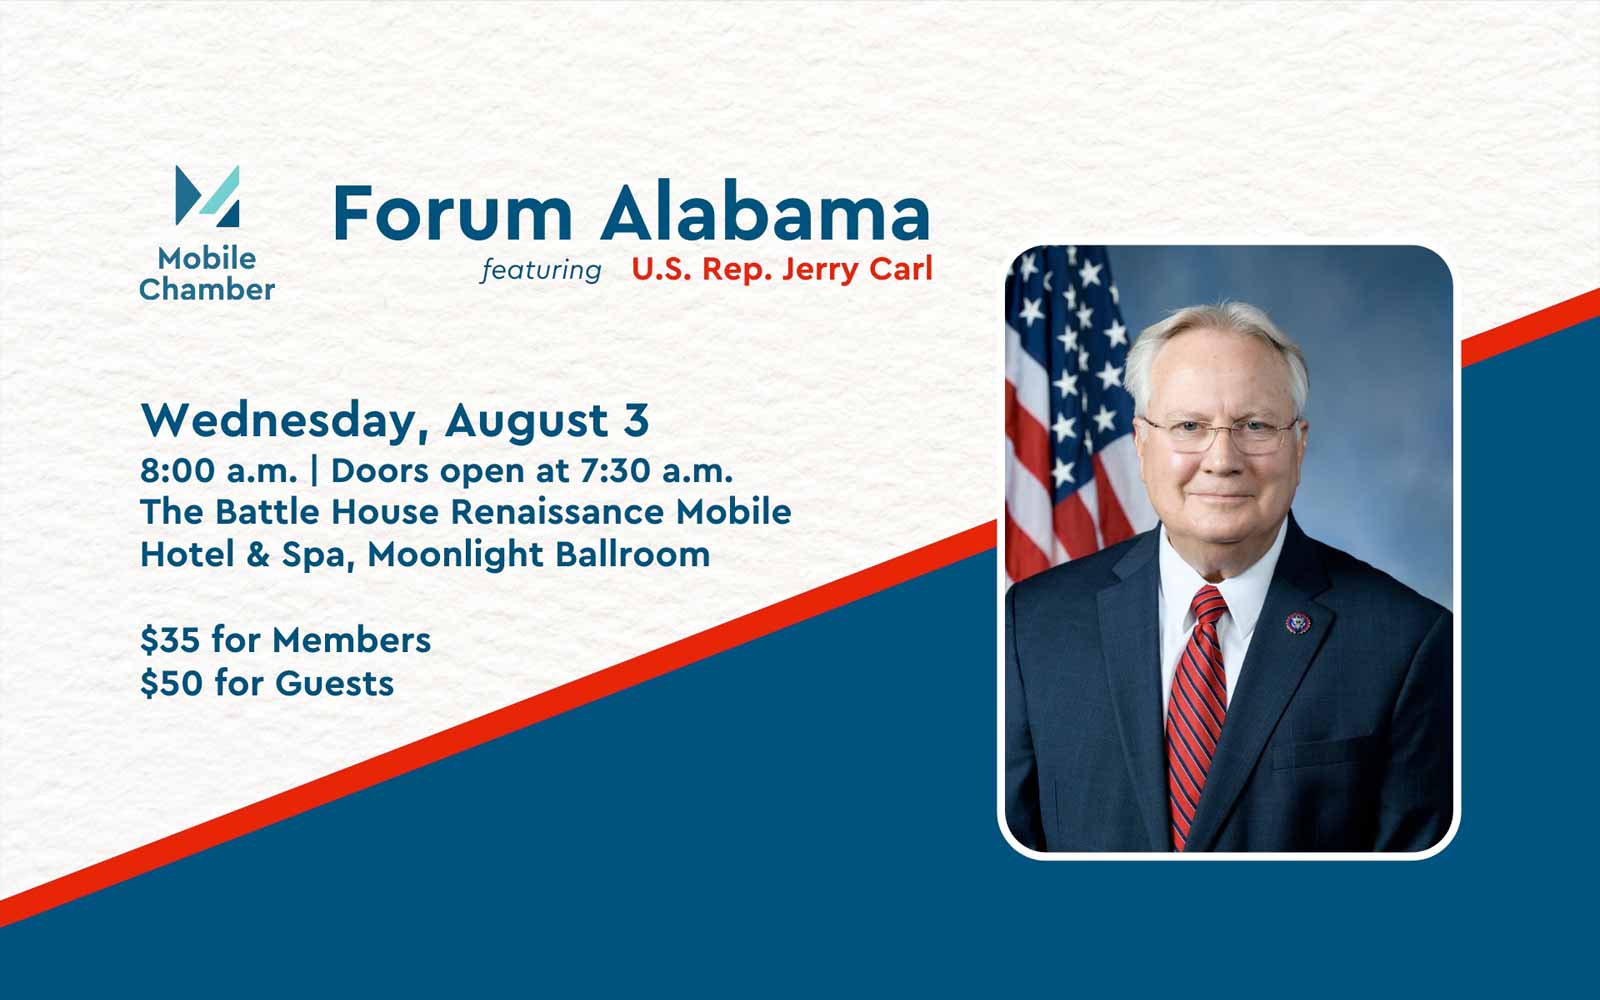 U.S. Rep. Jerry Carl To Speak At Forum Alabama